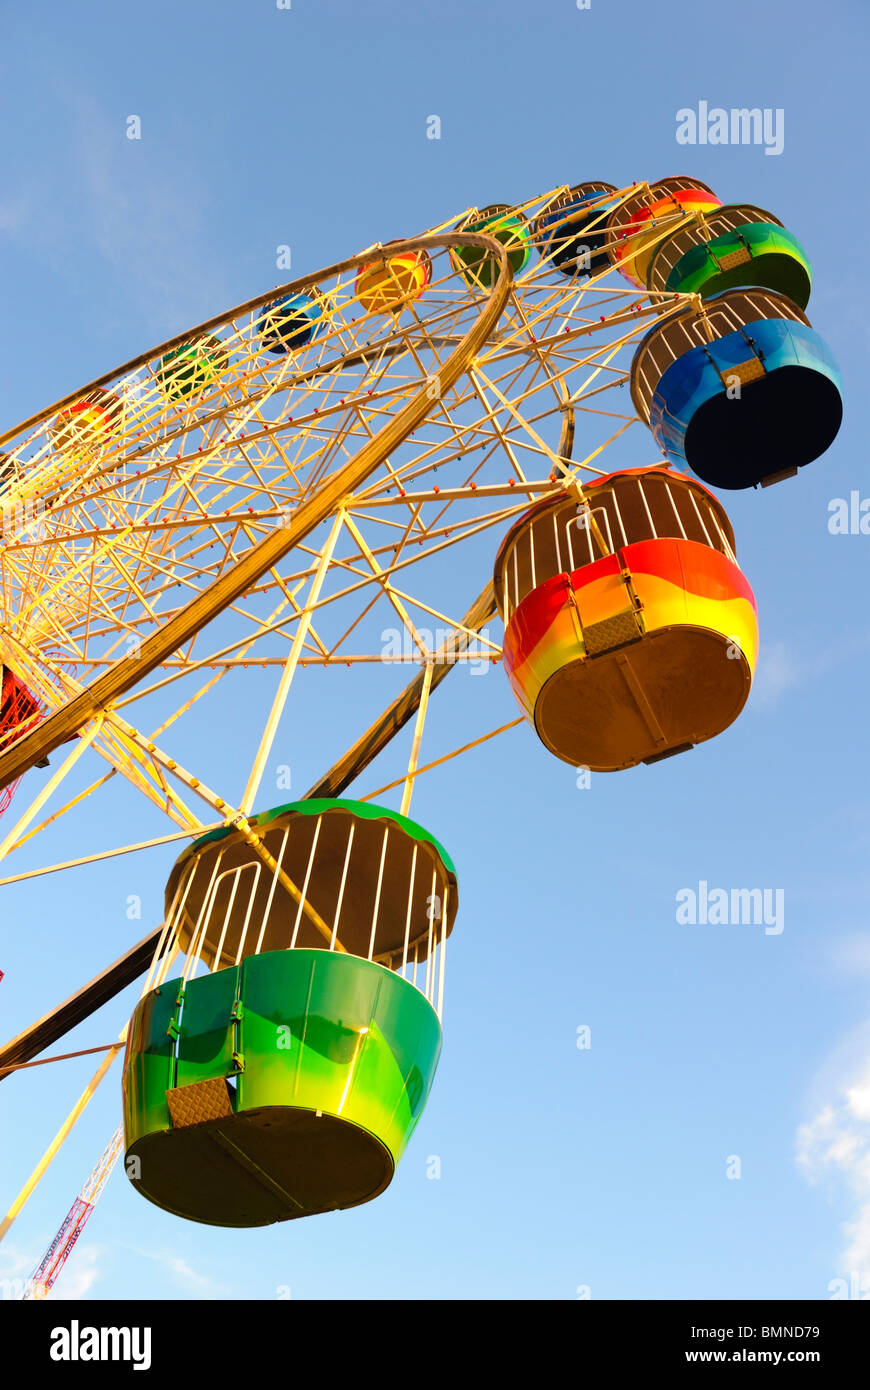 The colourful ferris wheel ride at the Luna Park amusement park, Sydney, Australia Stock Photo